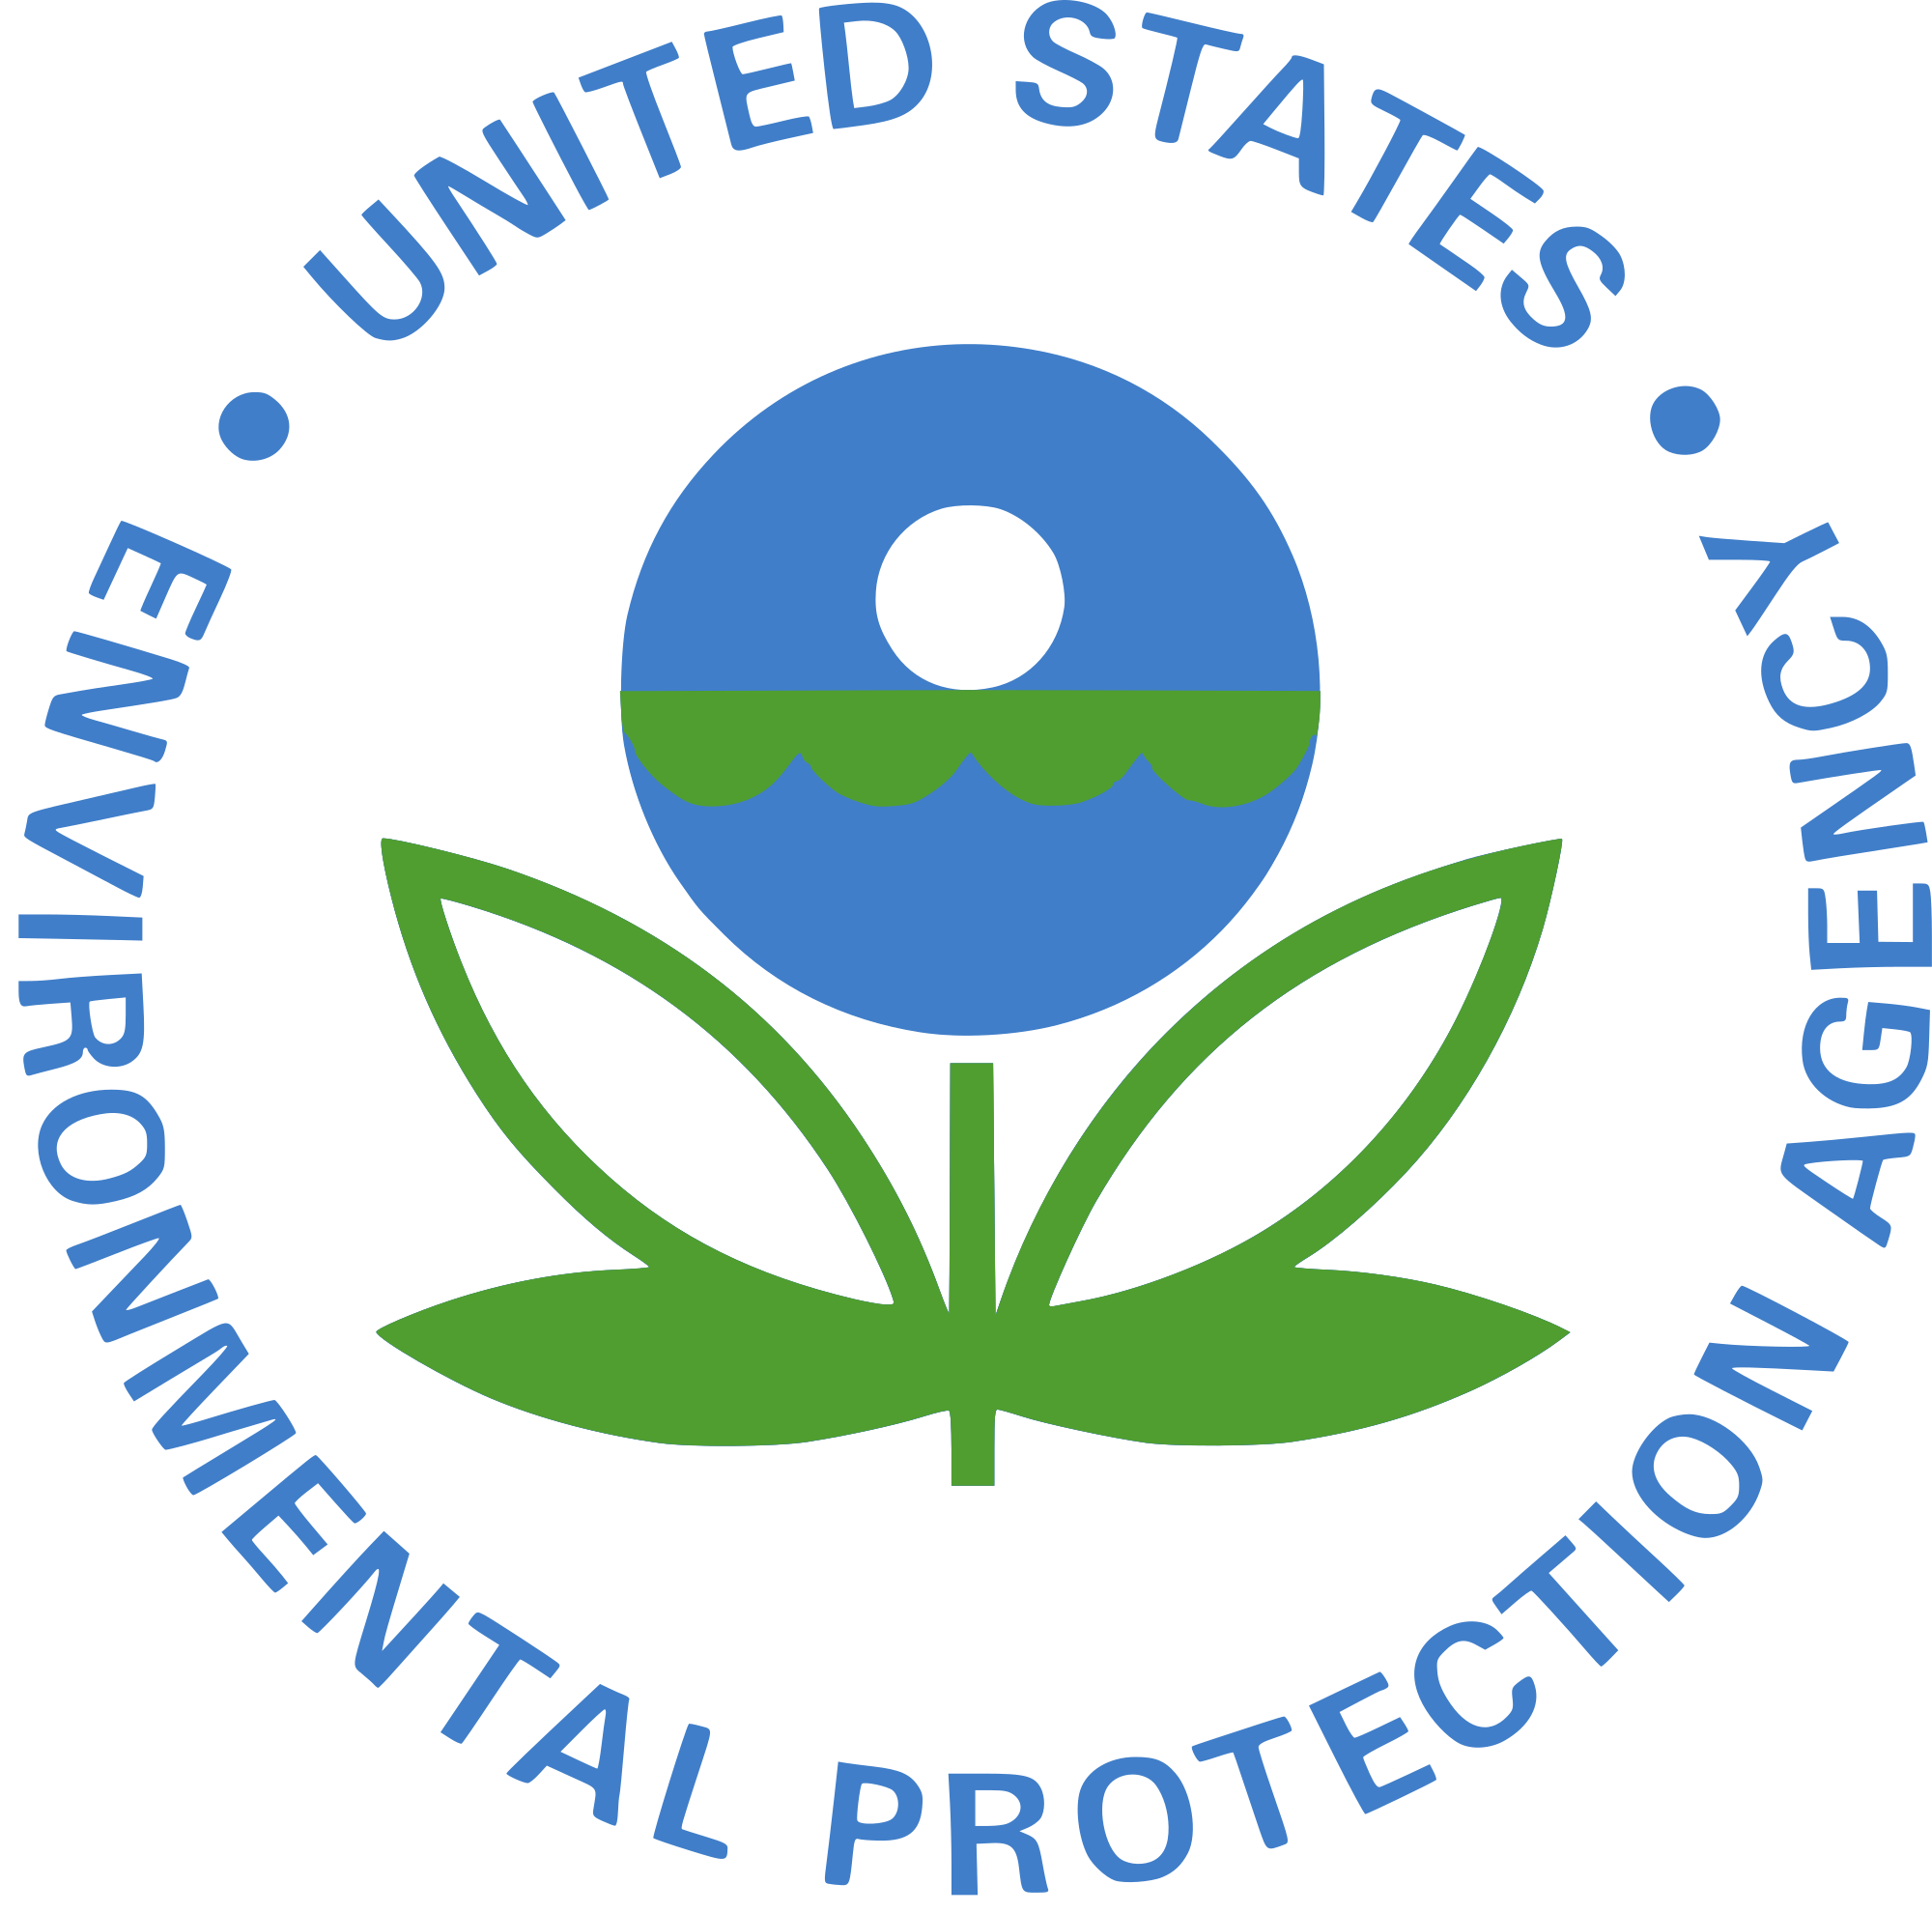 U.S. Environmental Protection Agency(EPA) logo